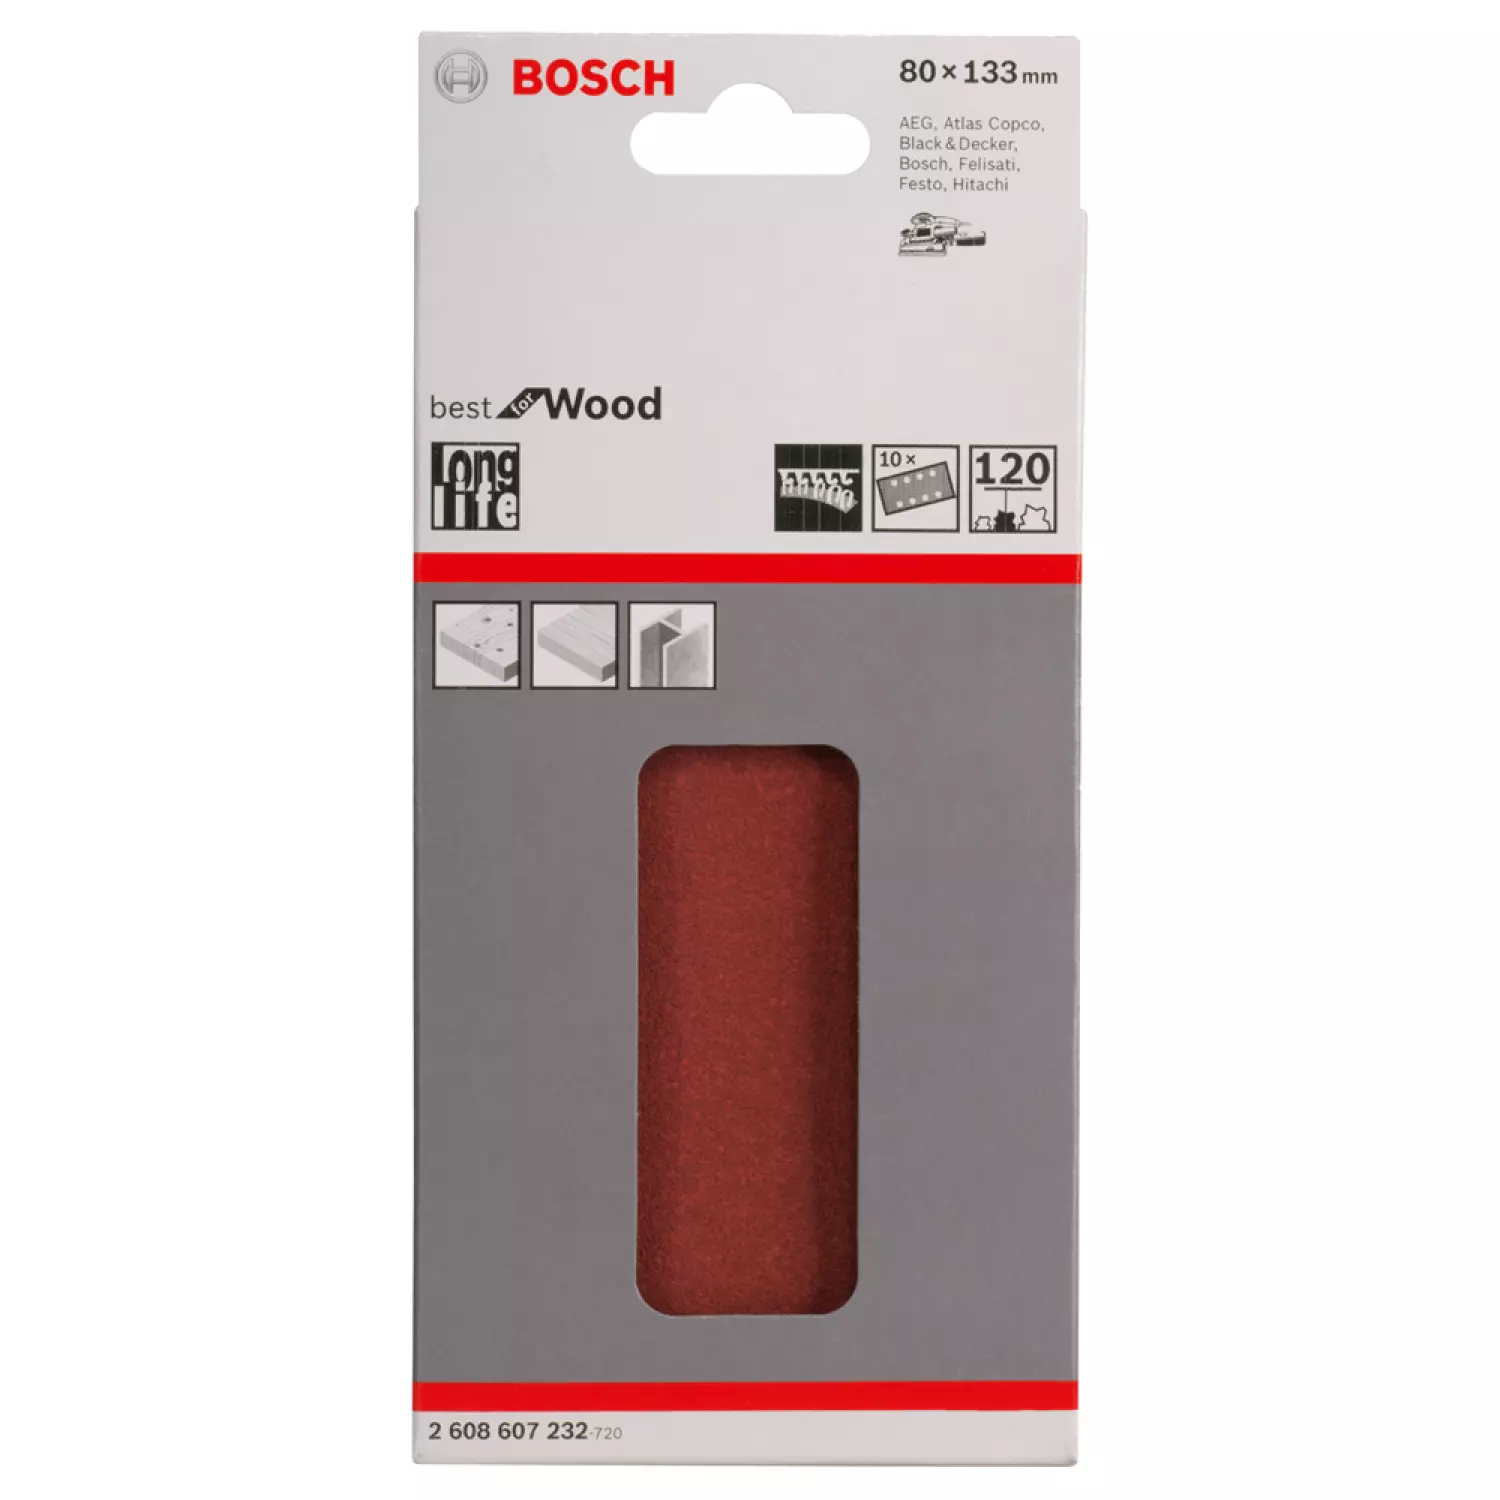 Bosch 06012A2300 - Ponceuse vibrante compacte GSS 160 Multi-usage